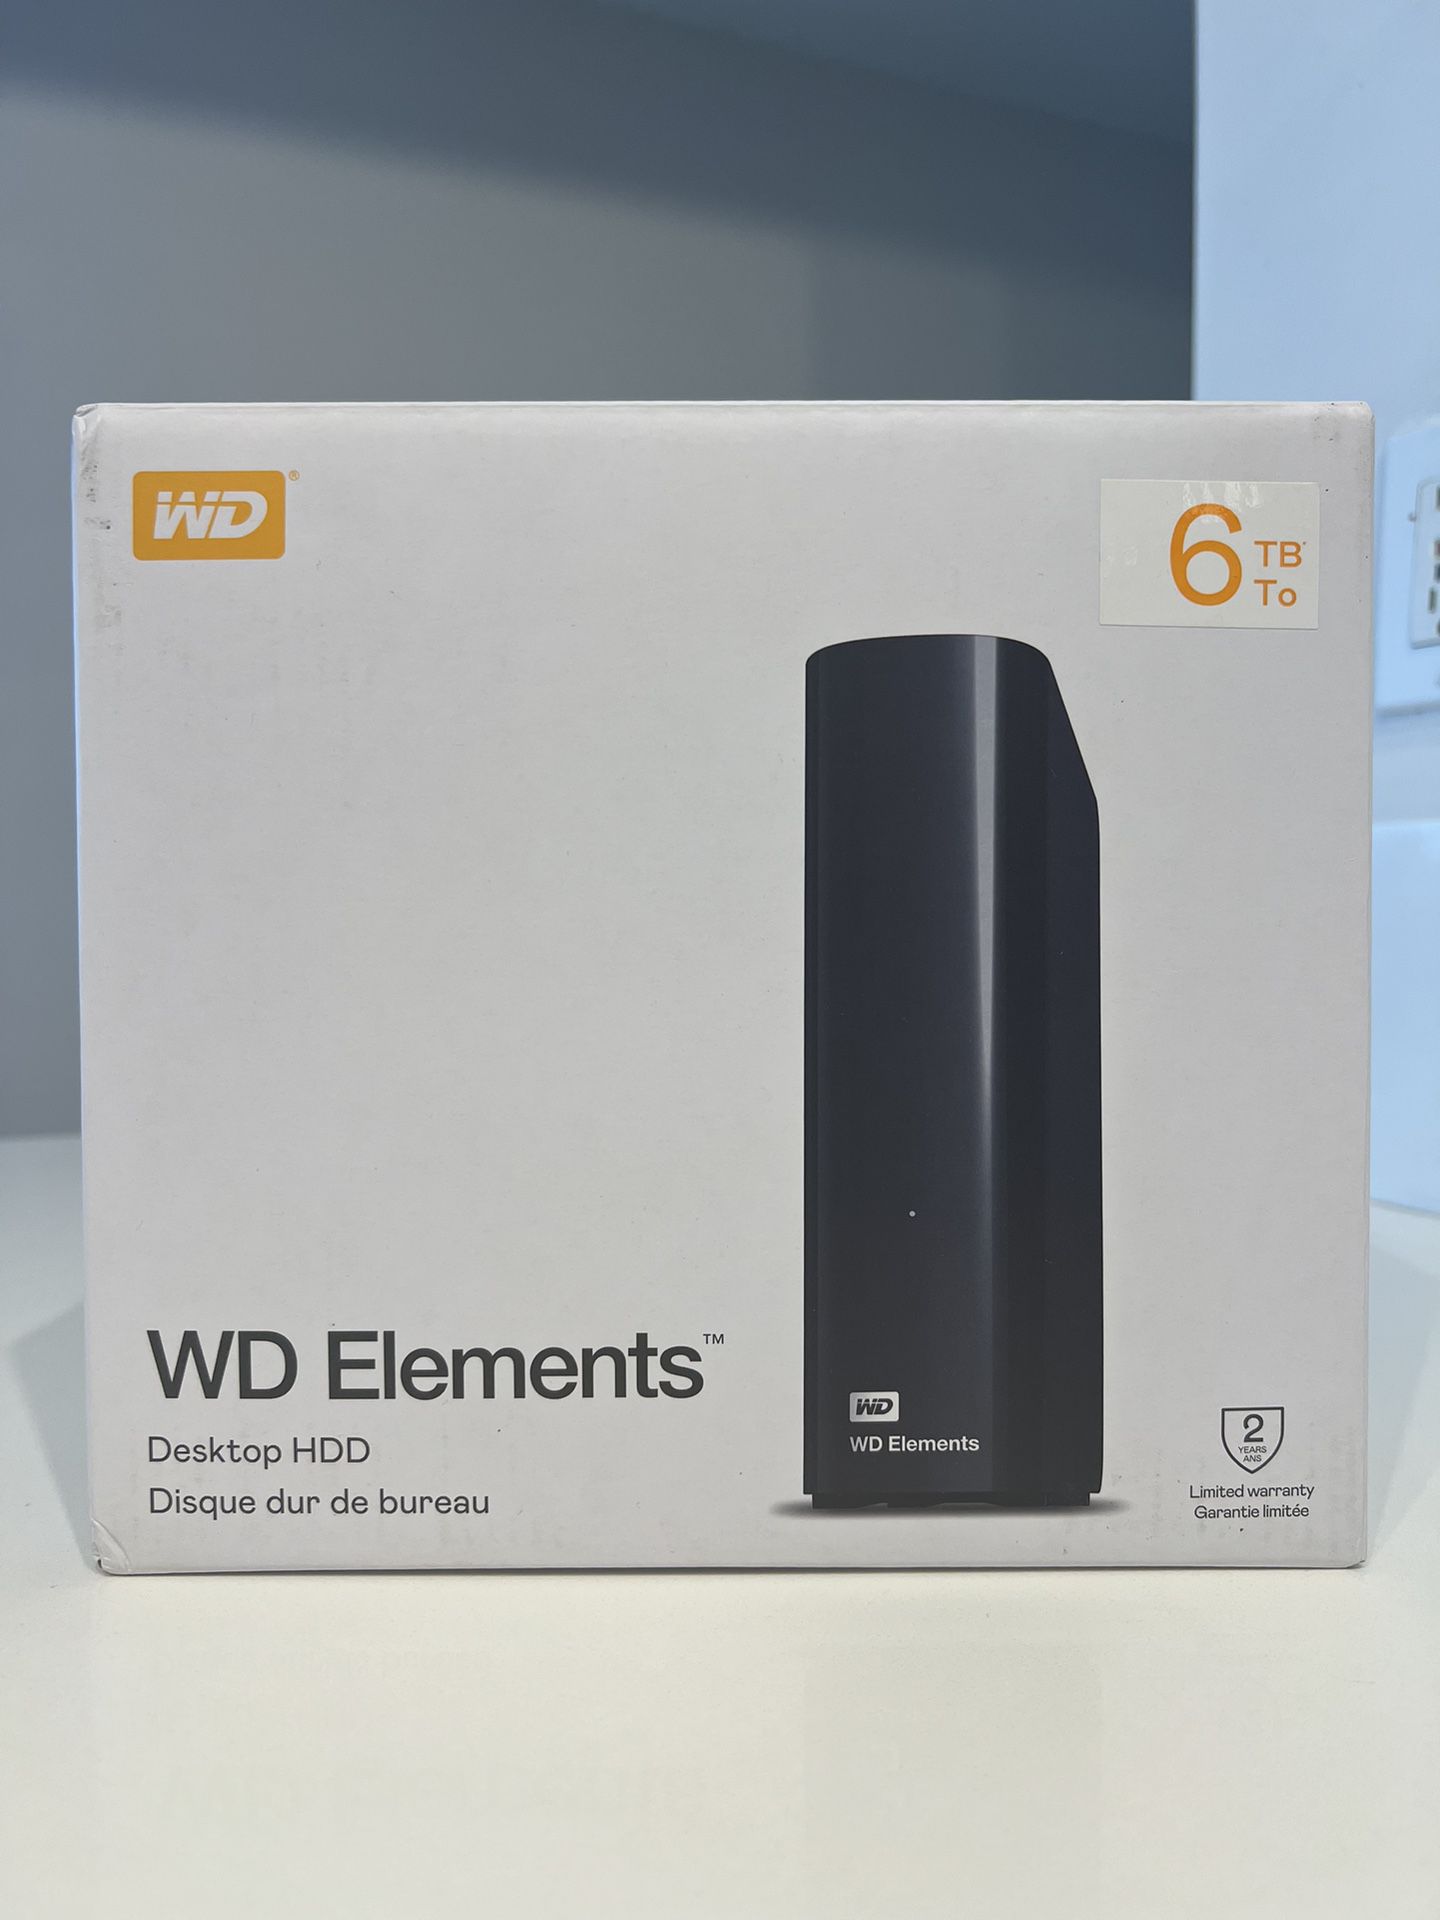  NEW Unopened Box !WD Elements 6 TB Desktop Hard Drive 